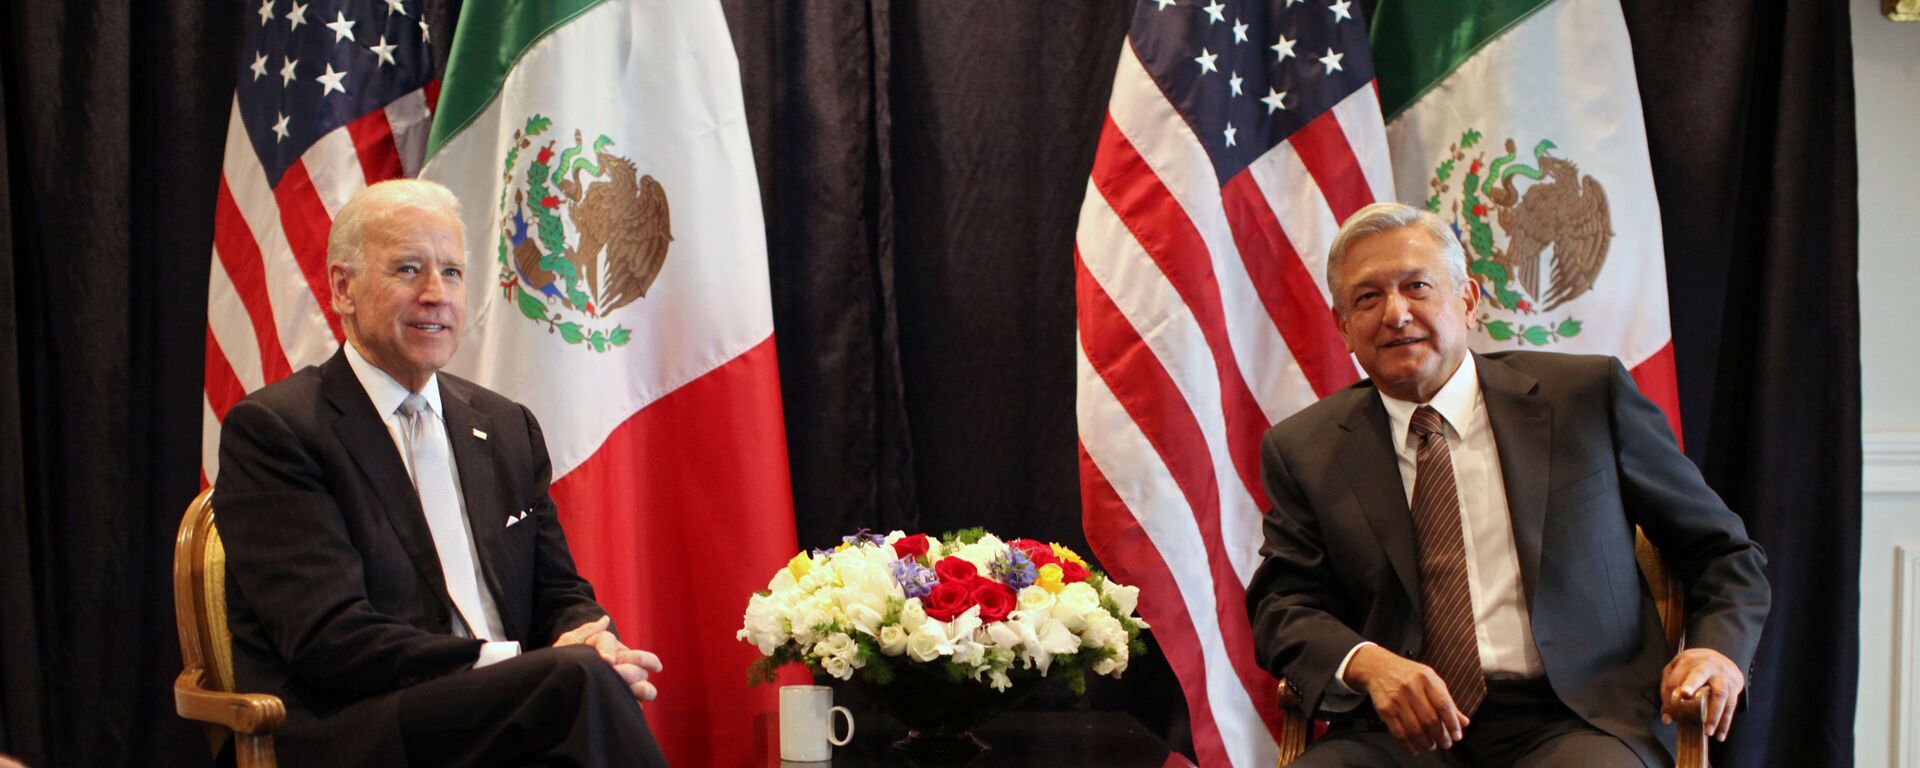 Joe Biden y Andrés Manuel López Obrador, 2012 - Sputnik Mundo, 1920, 20.12.2020